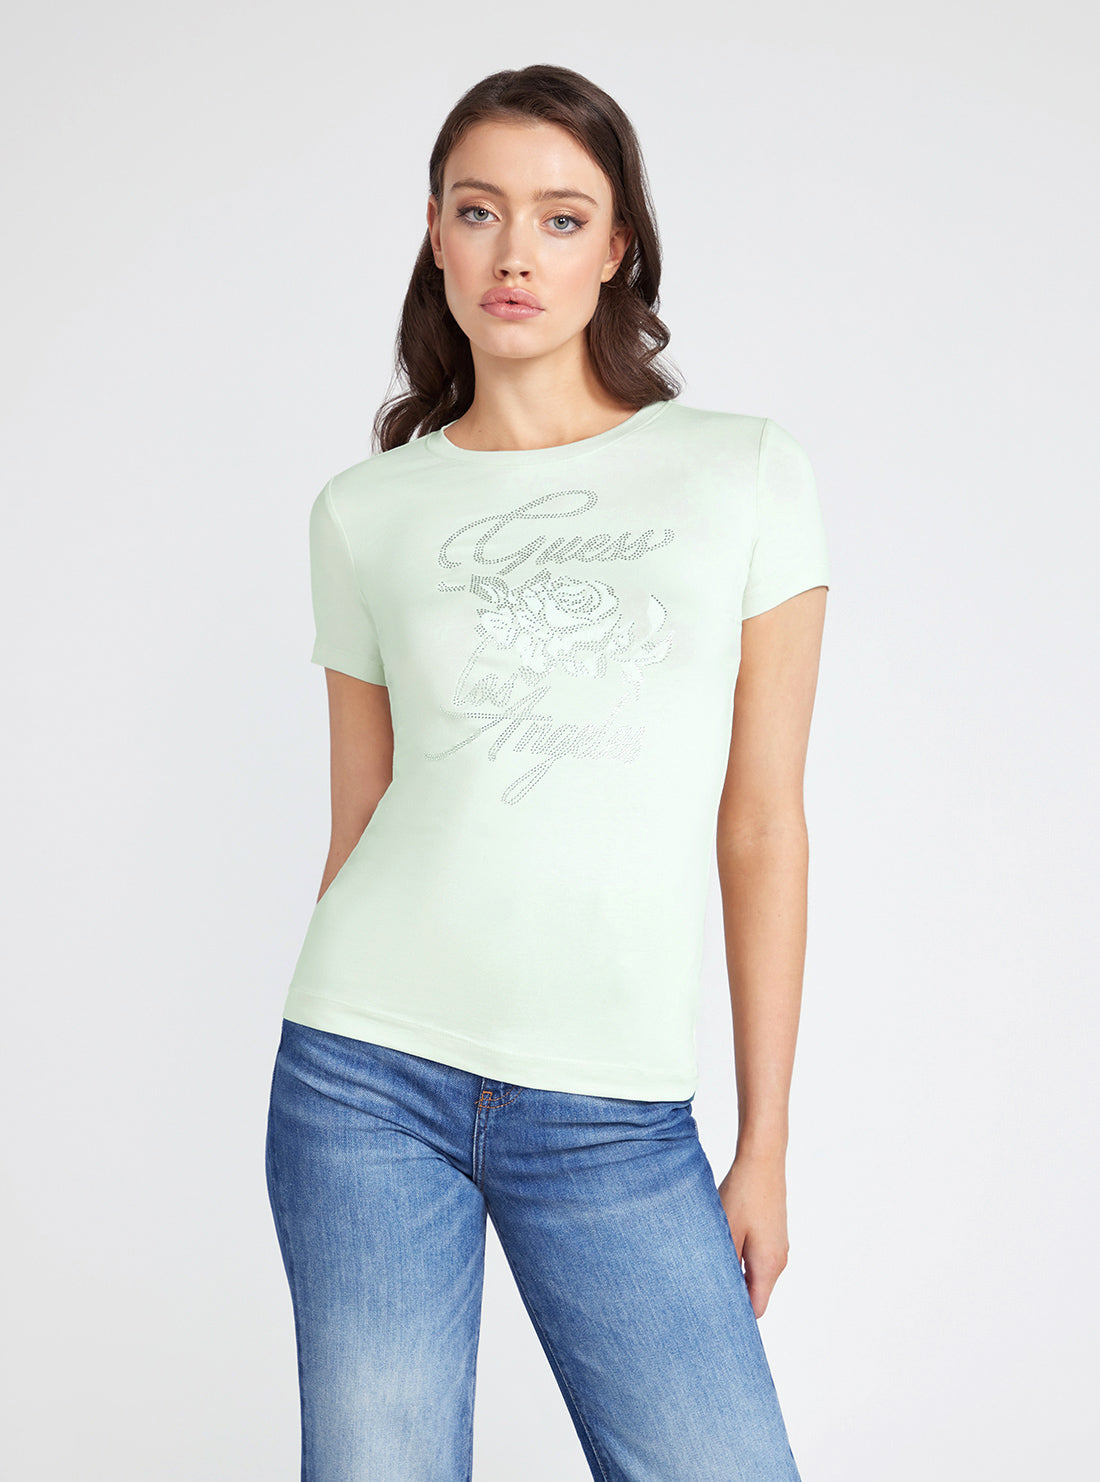 Mint Green Rhinestone Rose T-Shirt | GUESS Women's Apparel | front view